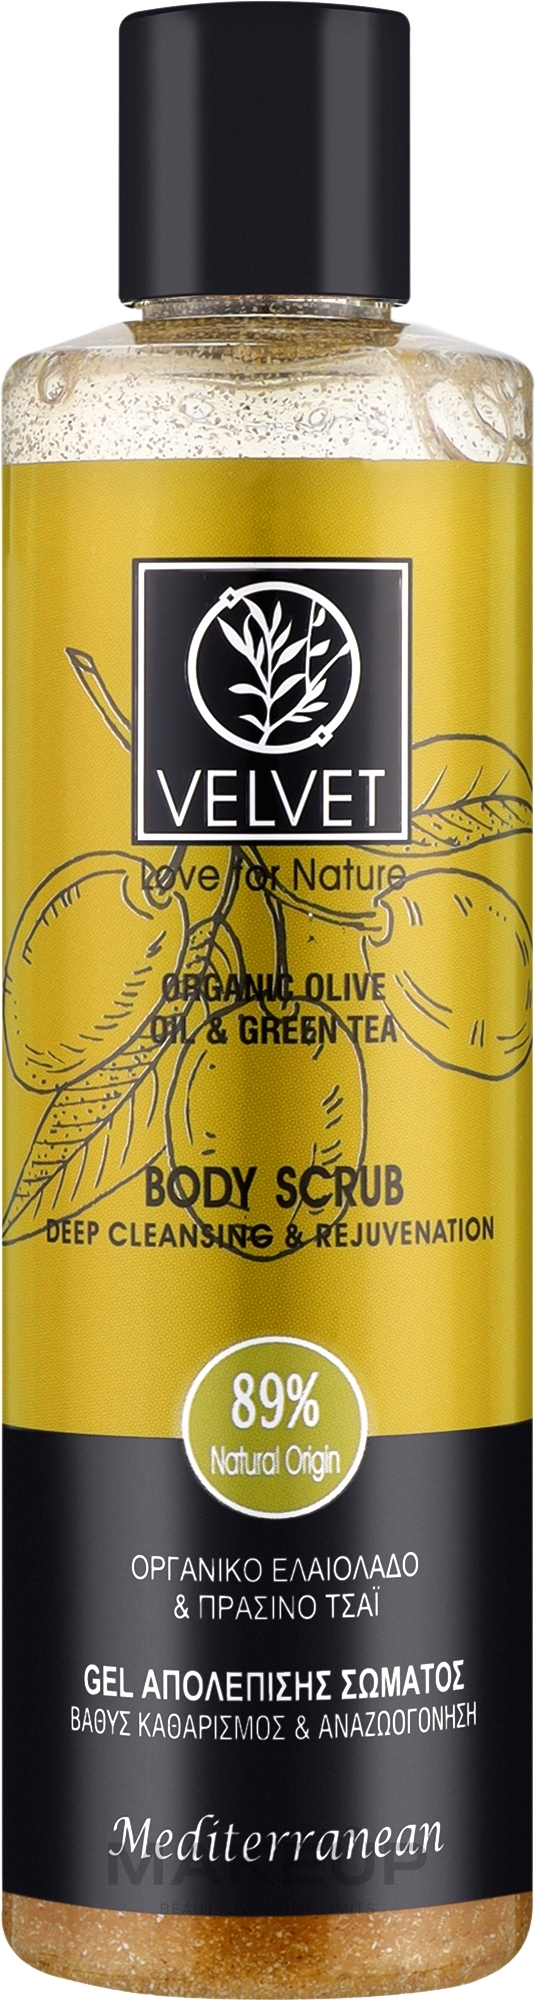 Скраб для тела - Velvet Love for Nature Organic Olive & Green Tea Body Scrub — фото 250ml